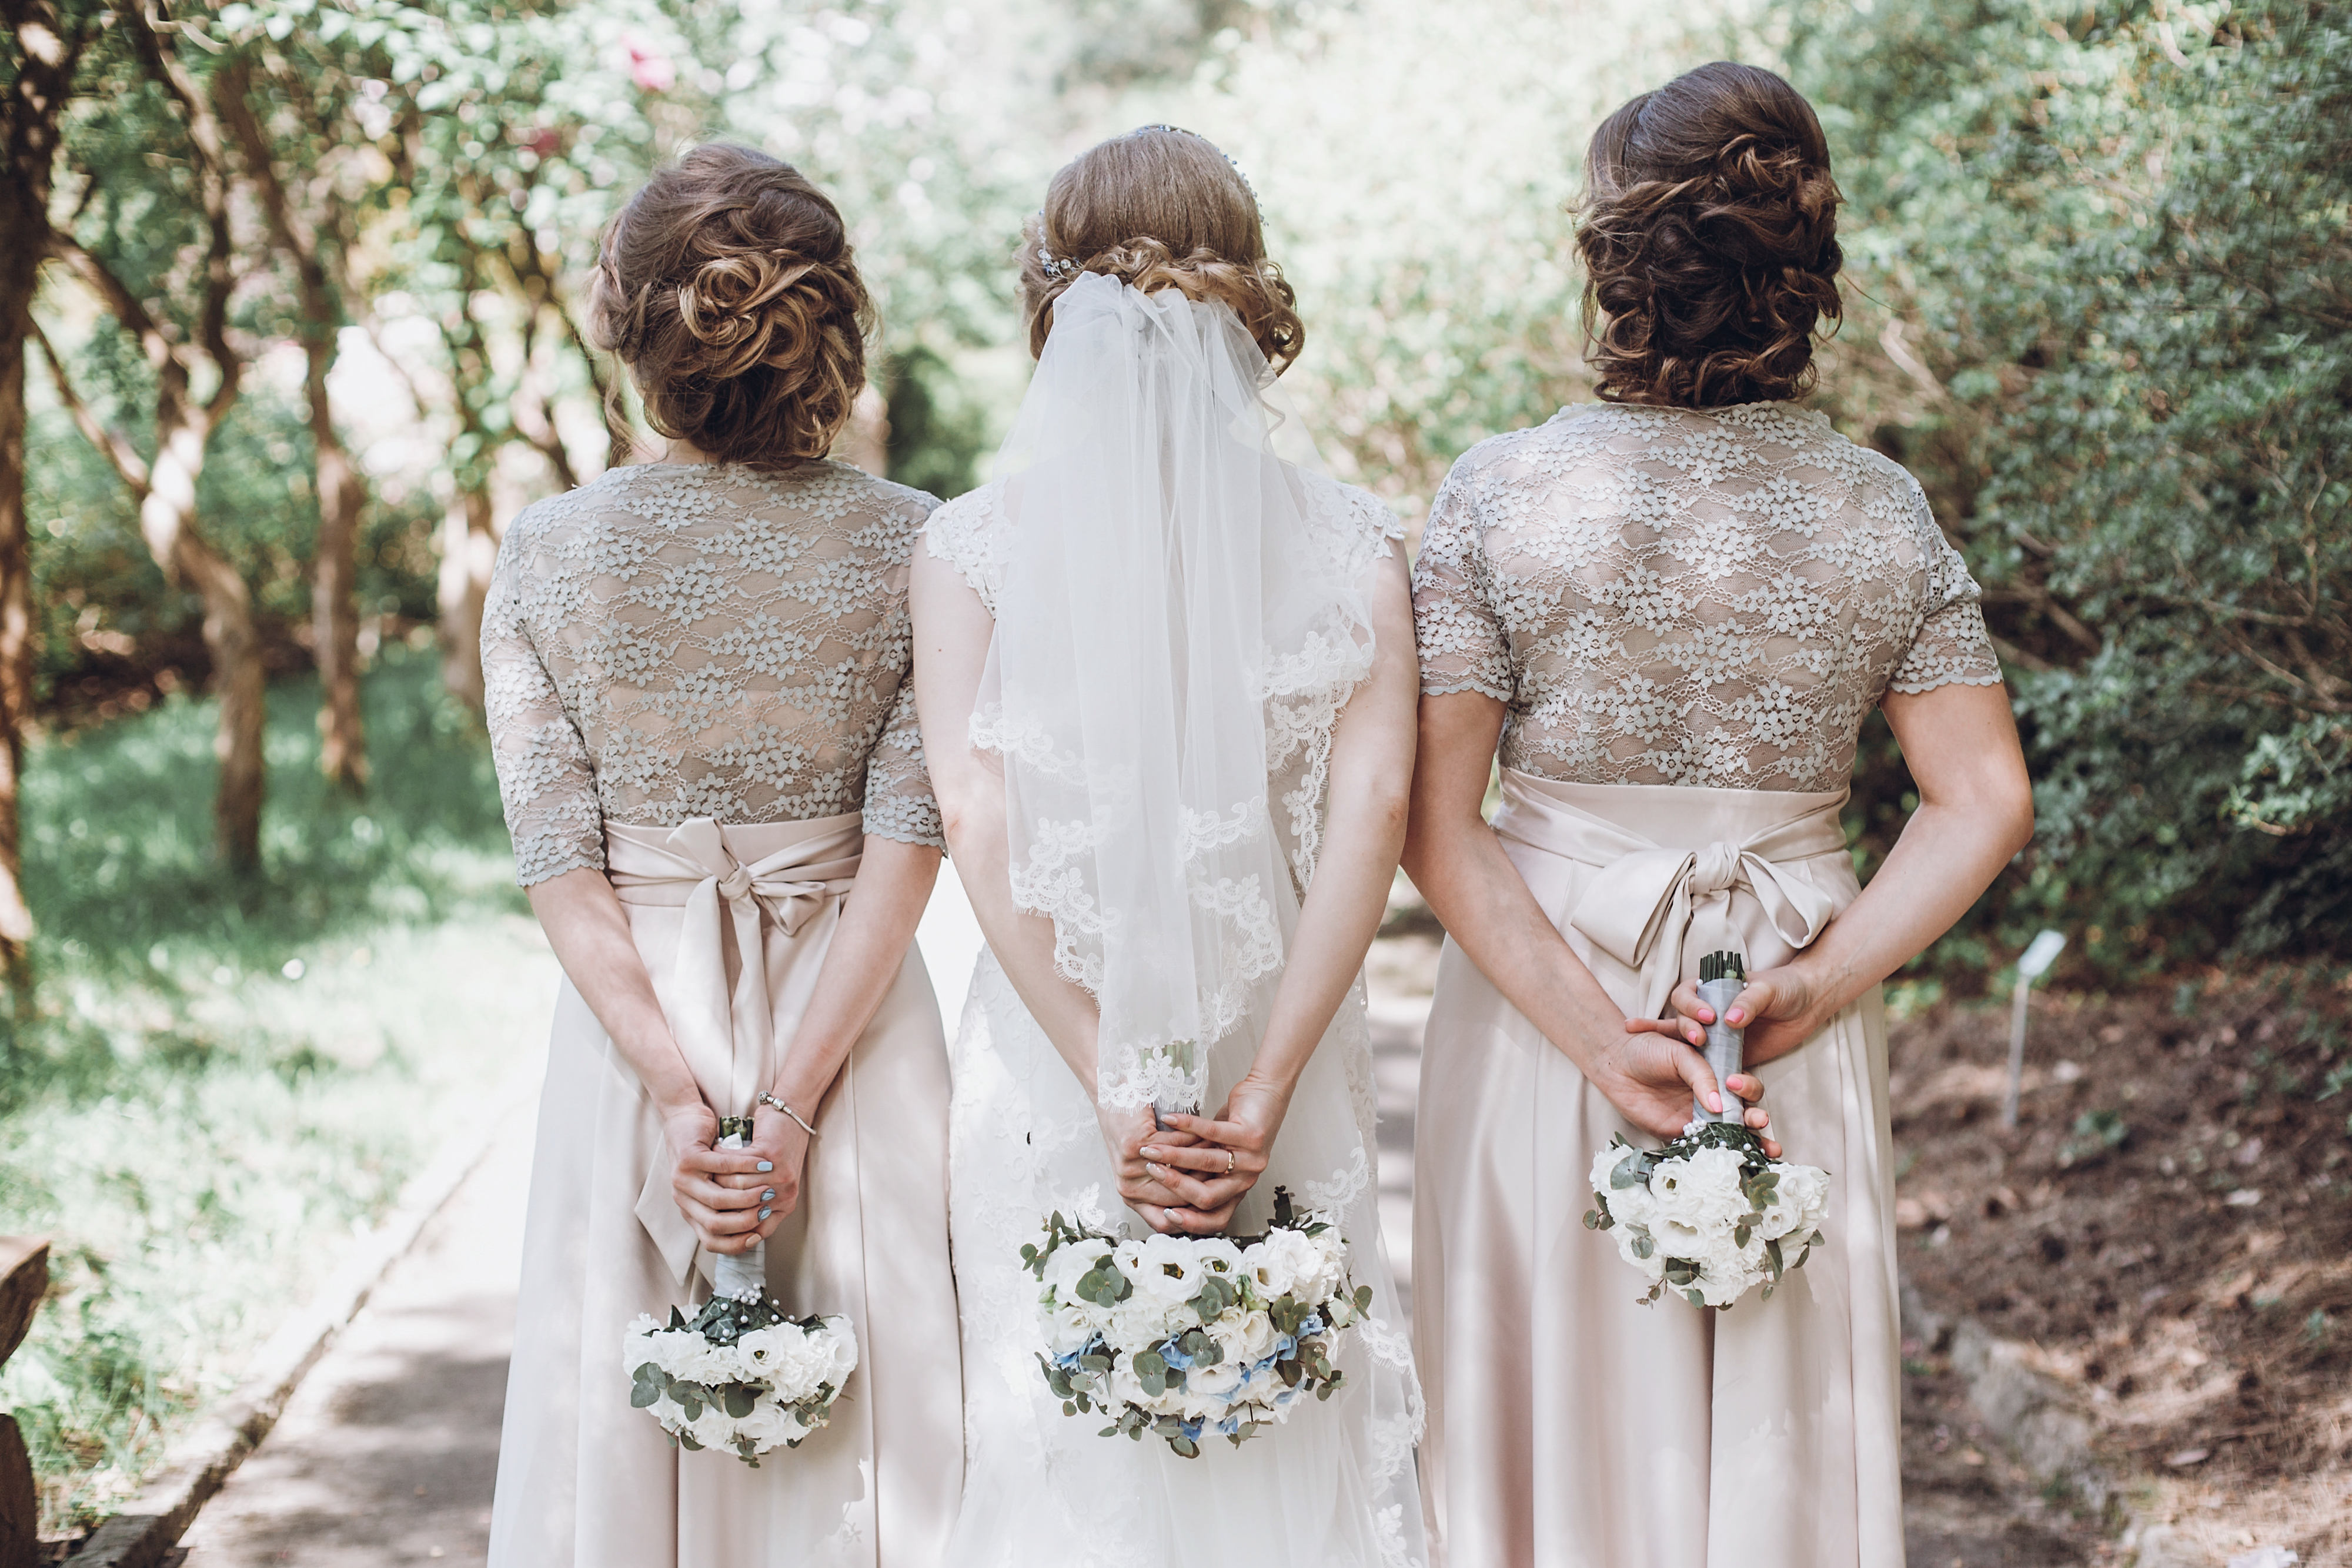 Bride with her bridesmaids. | Source: Shutterstock